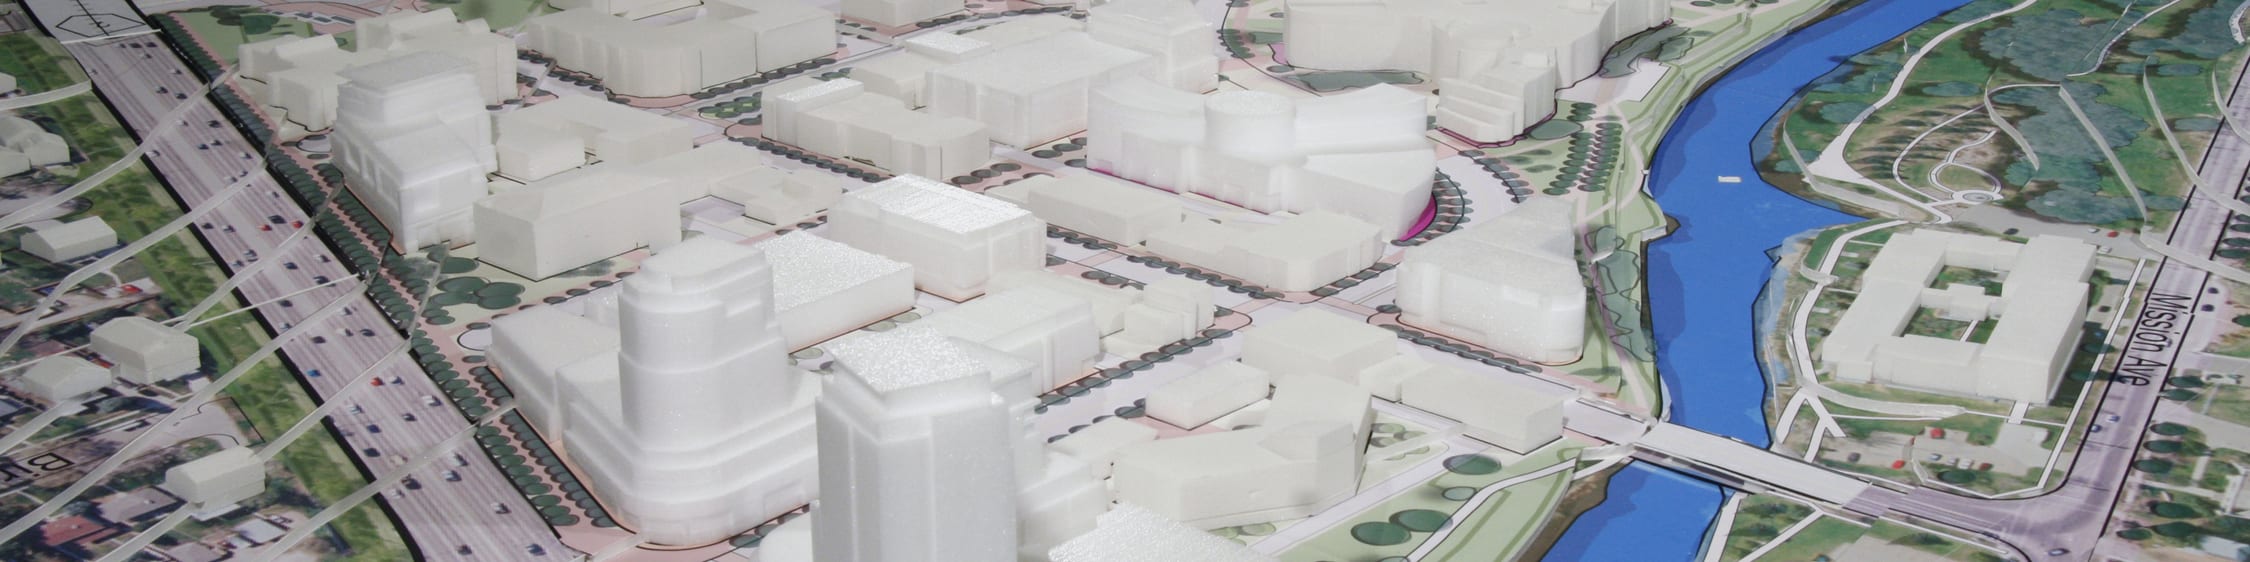 St. Albert Downtown Area scale model